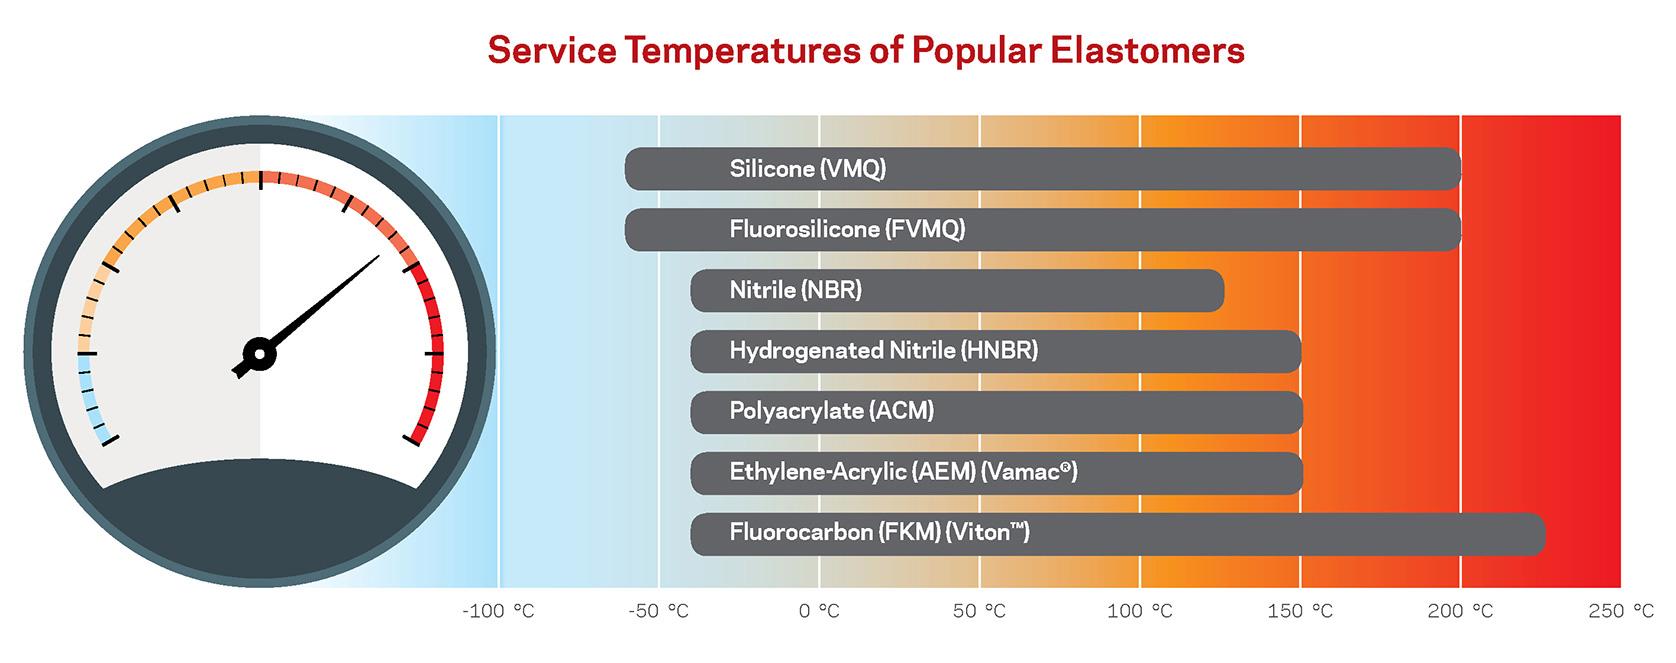 Service temperatures of popular elastomers